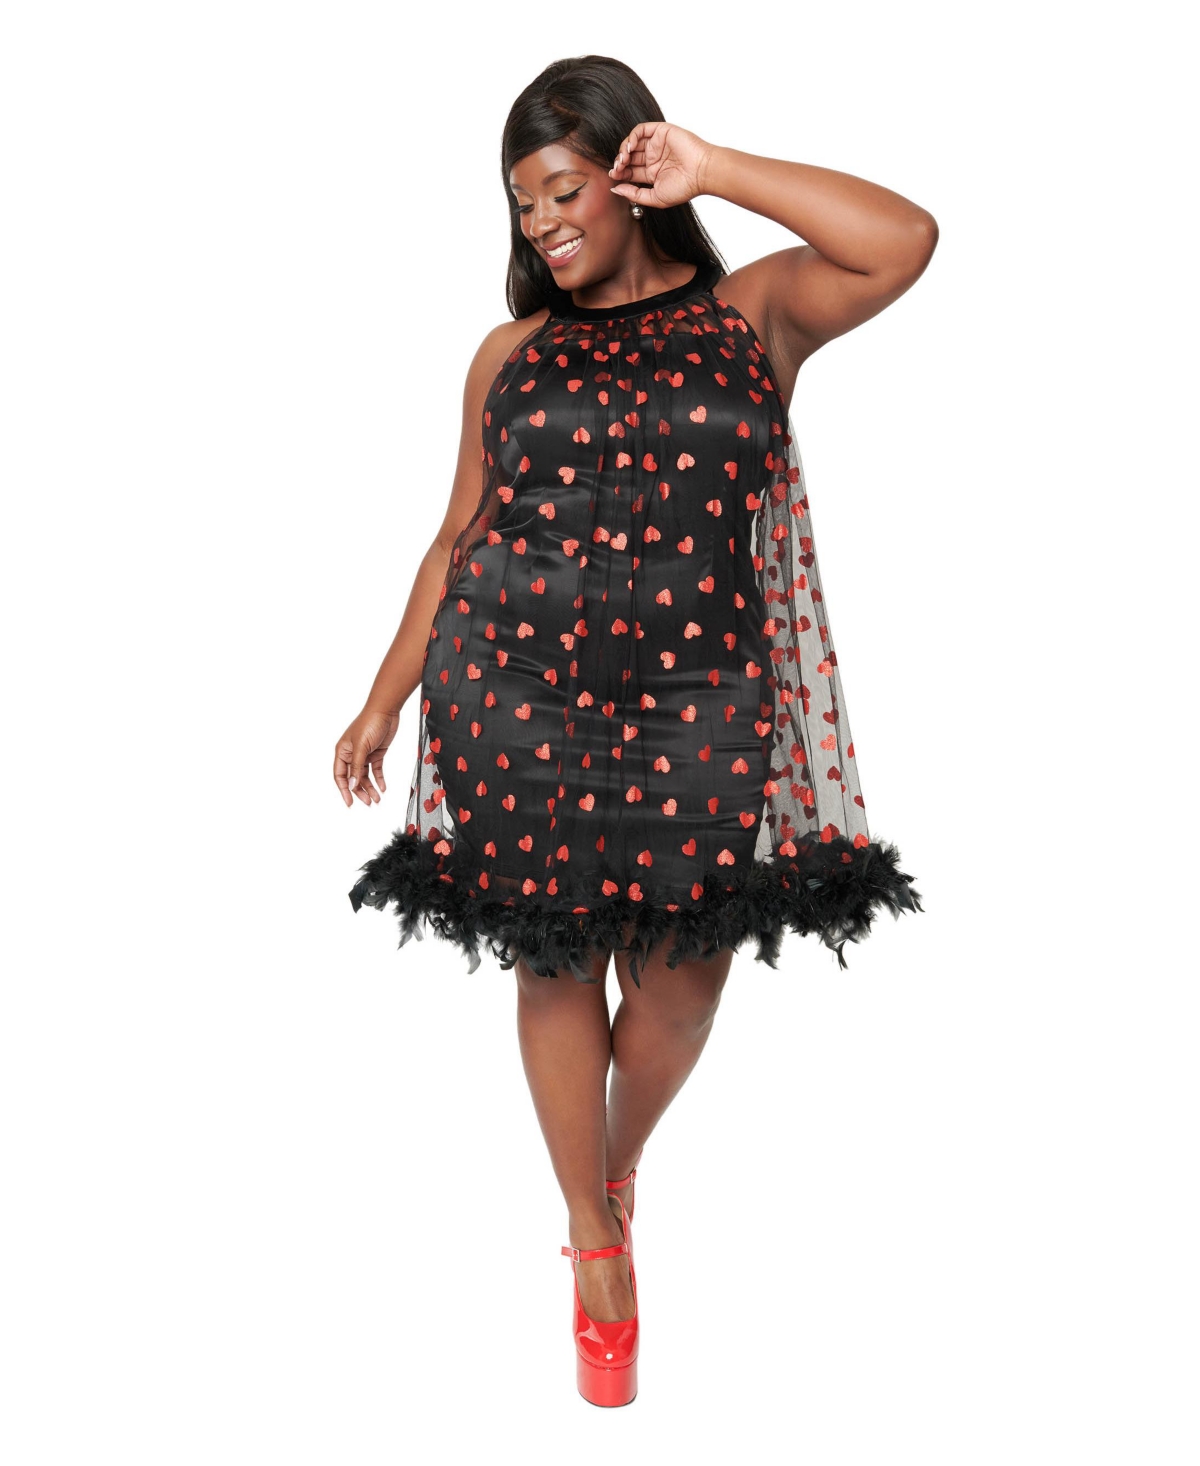 Plus Size Black Mesh & Glitter Hearts Organza Dress - Black/glitter hearts